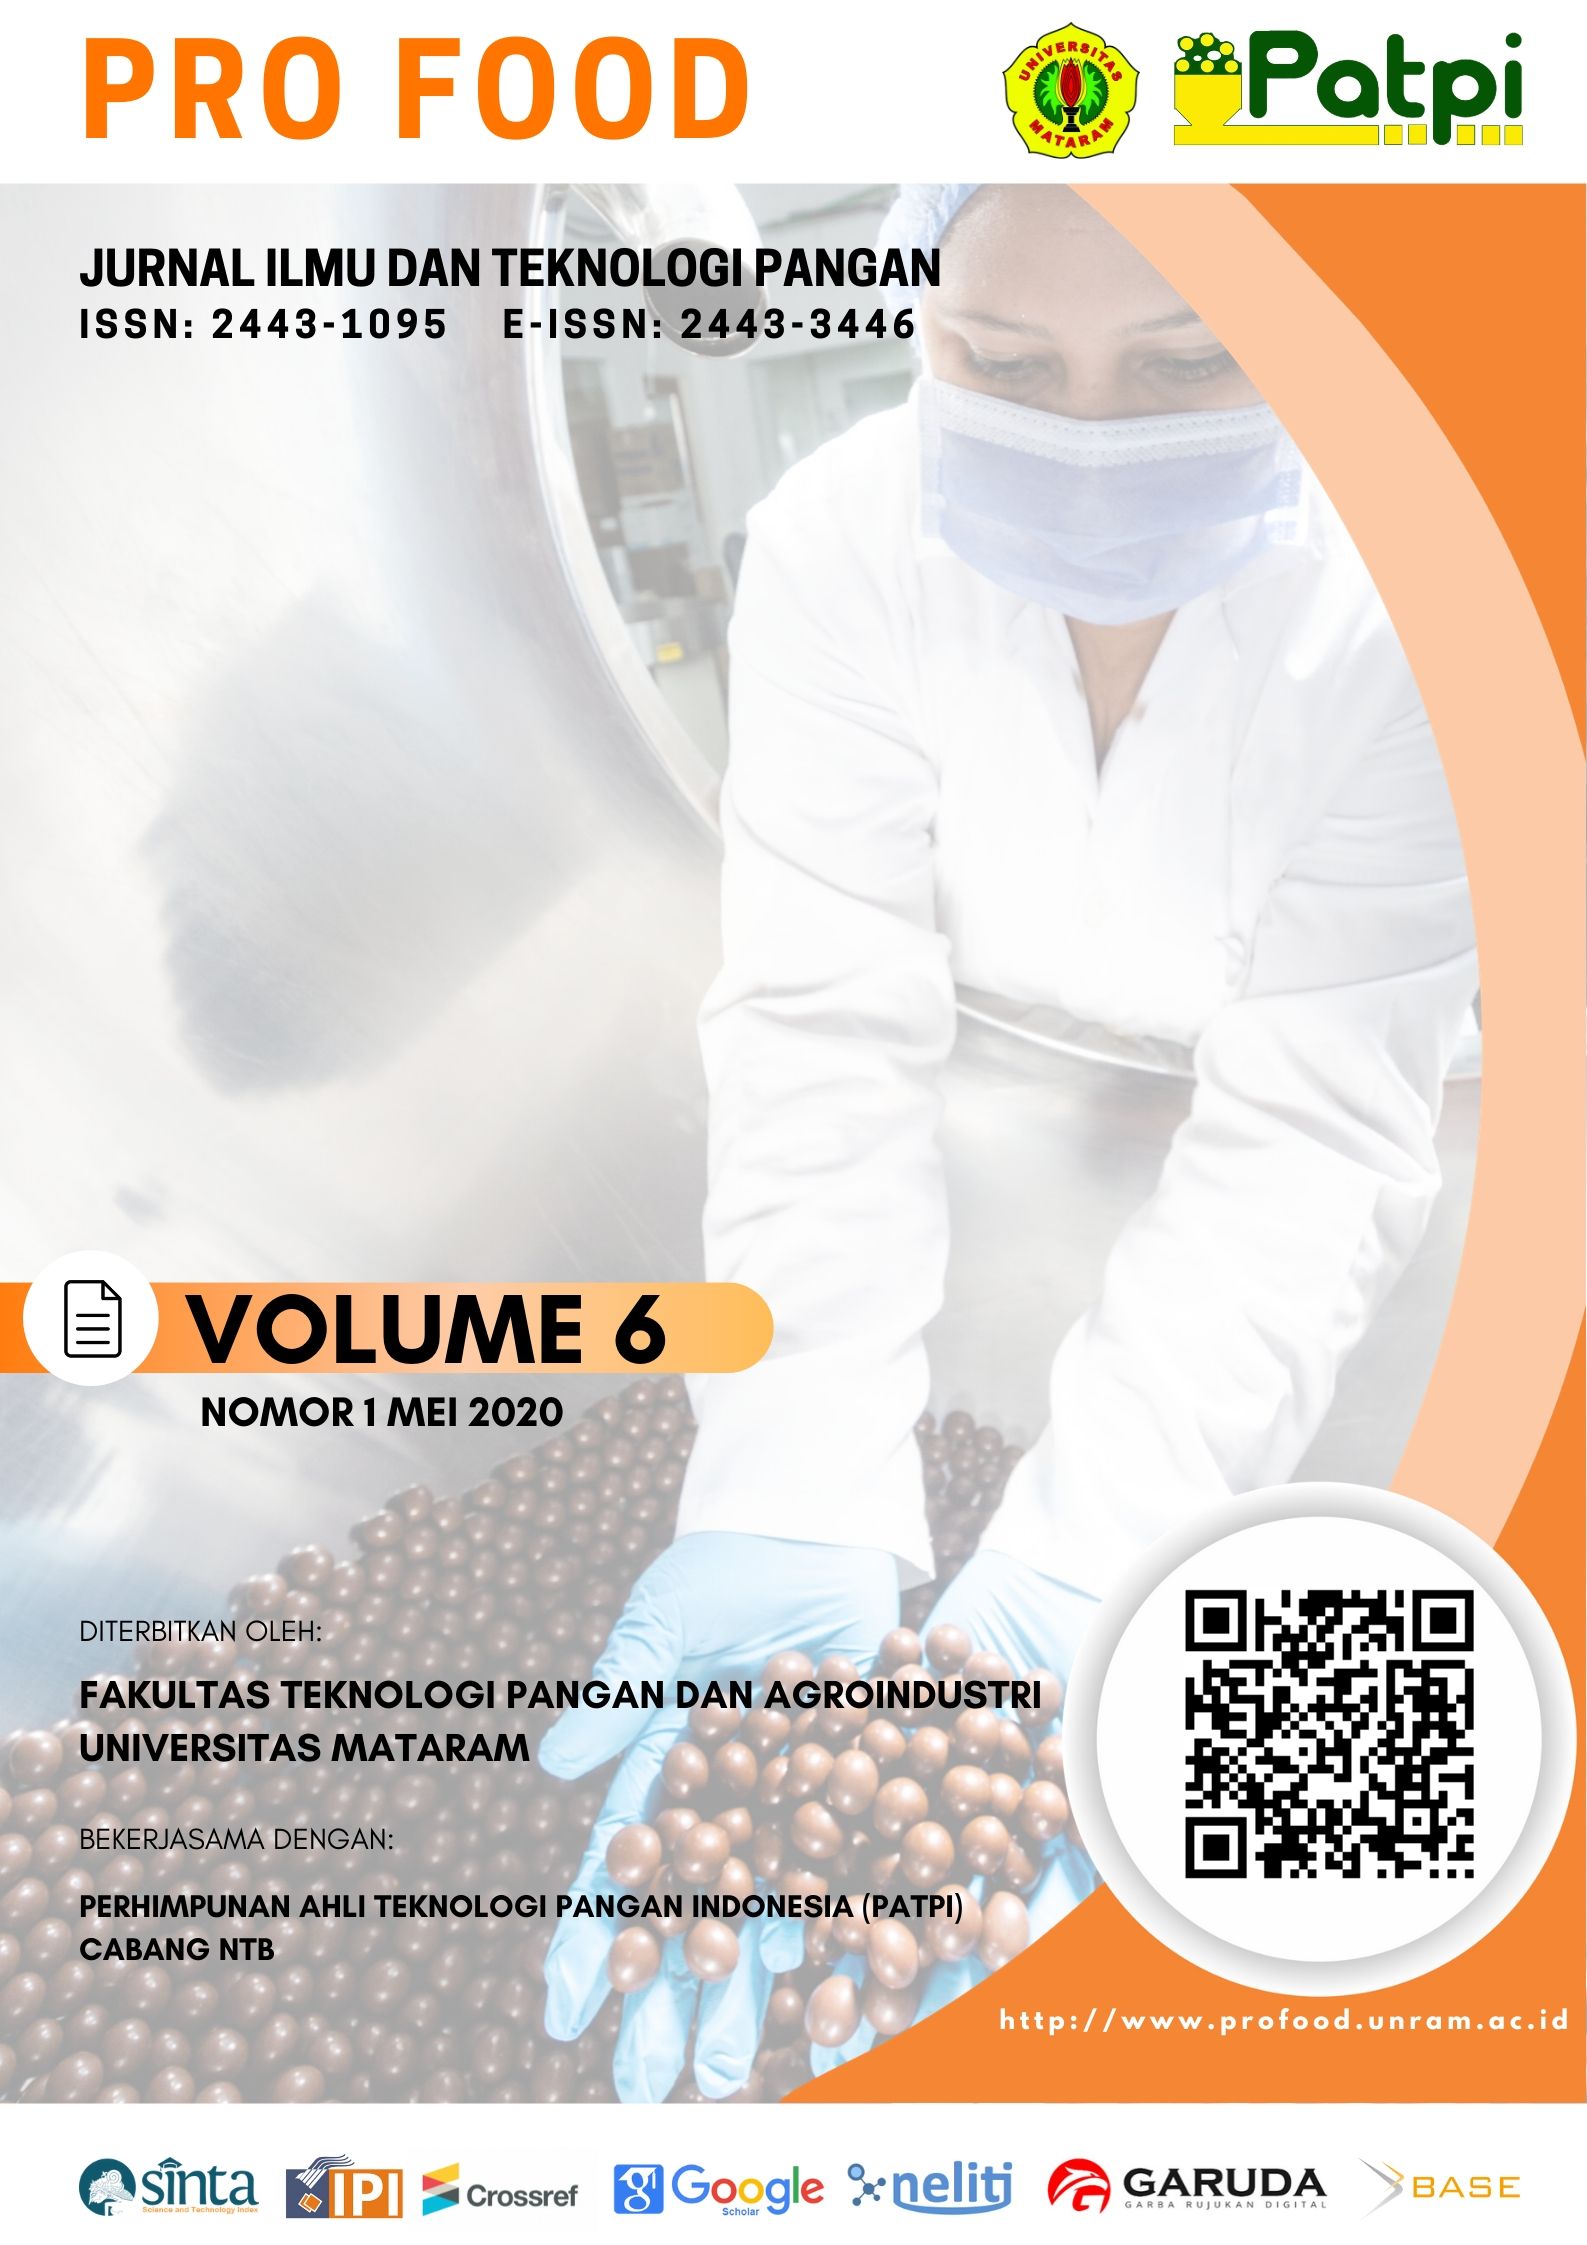 					View Vol. 6 No. 1 (2020): Pro Food (Jurnal Ilmu dan Teknologi Pangan)
				